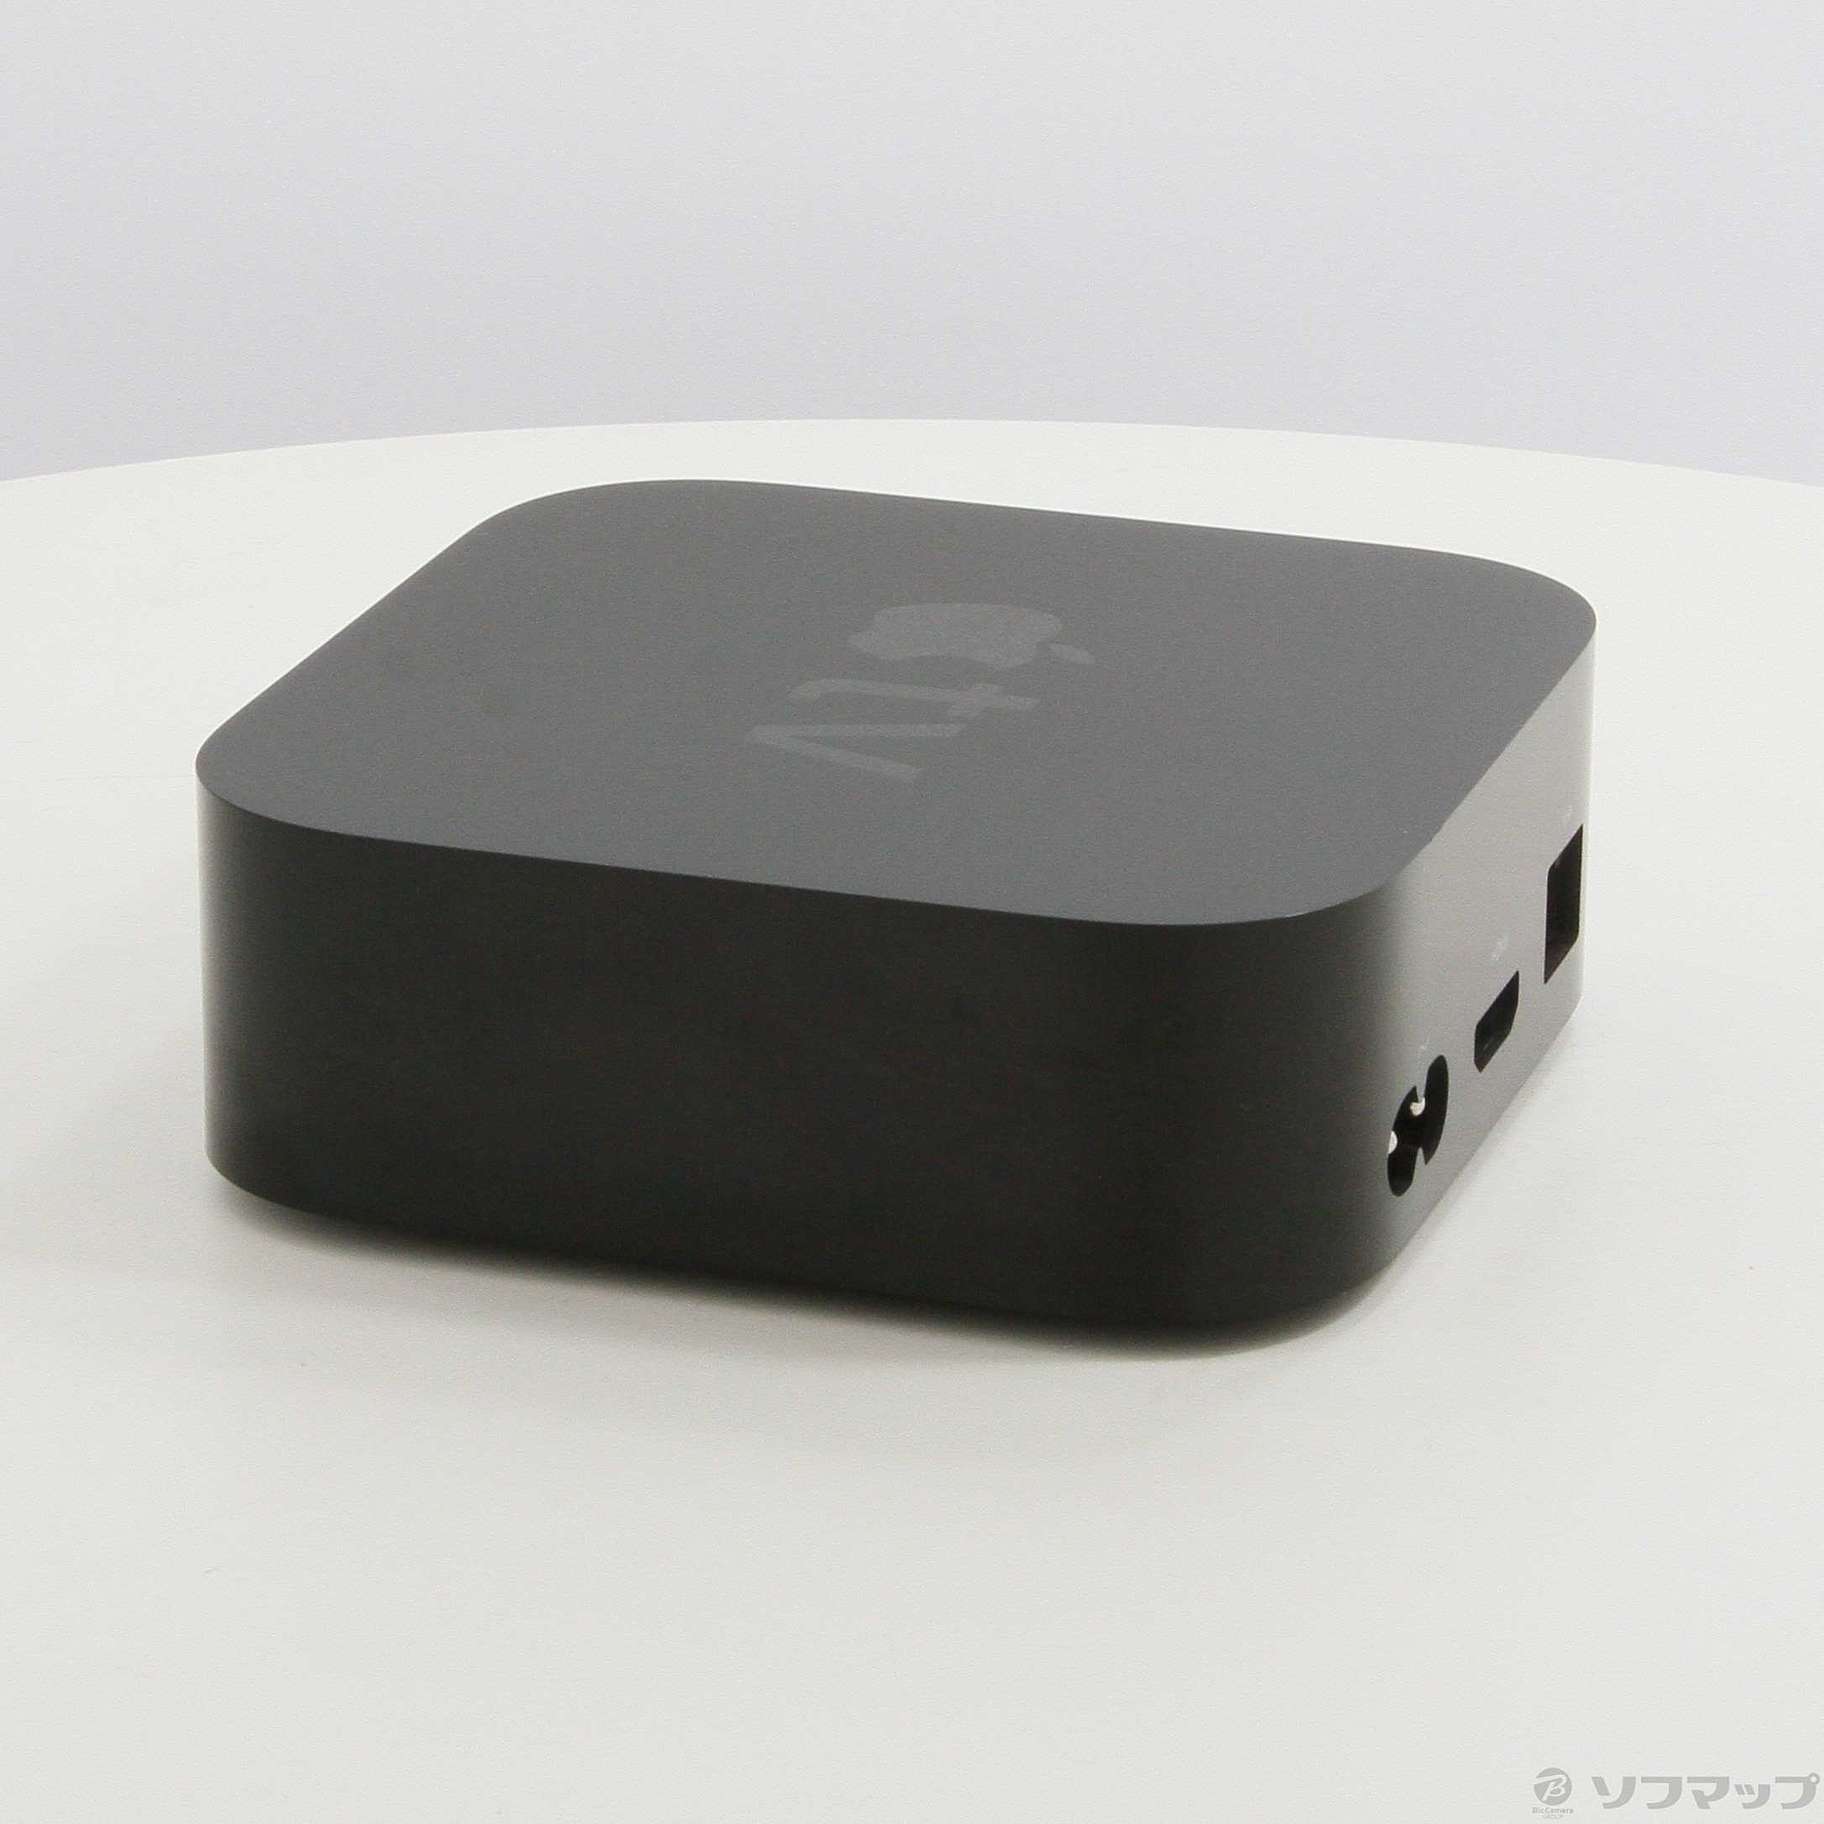 Apple アップル　TV 4k MP7P2J/A 64GB